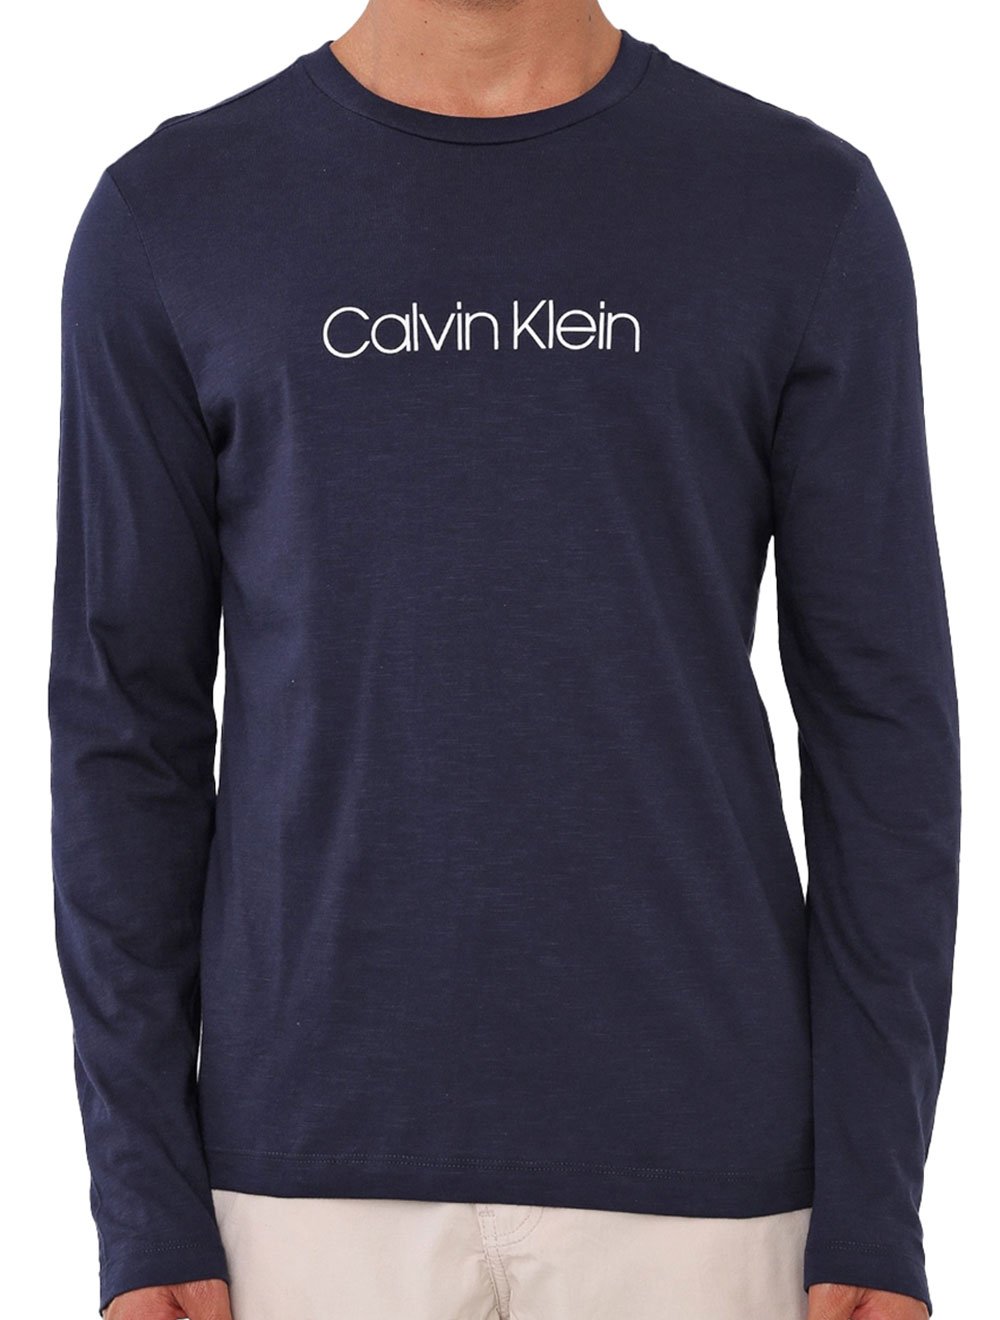 Camiseta Calvin Klein Masculina Manga Longa Institutional Flamê Azul Marinho